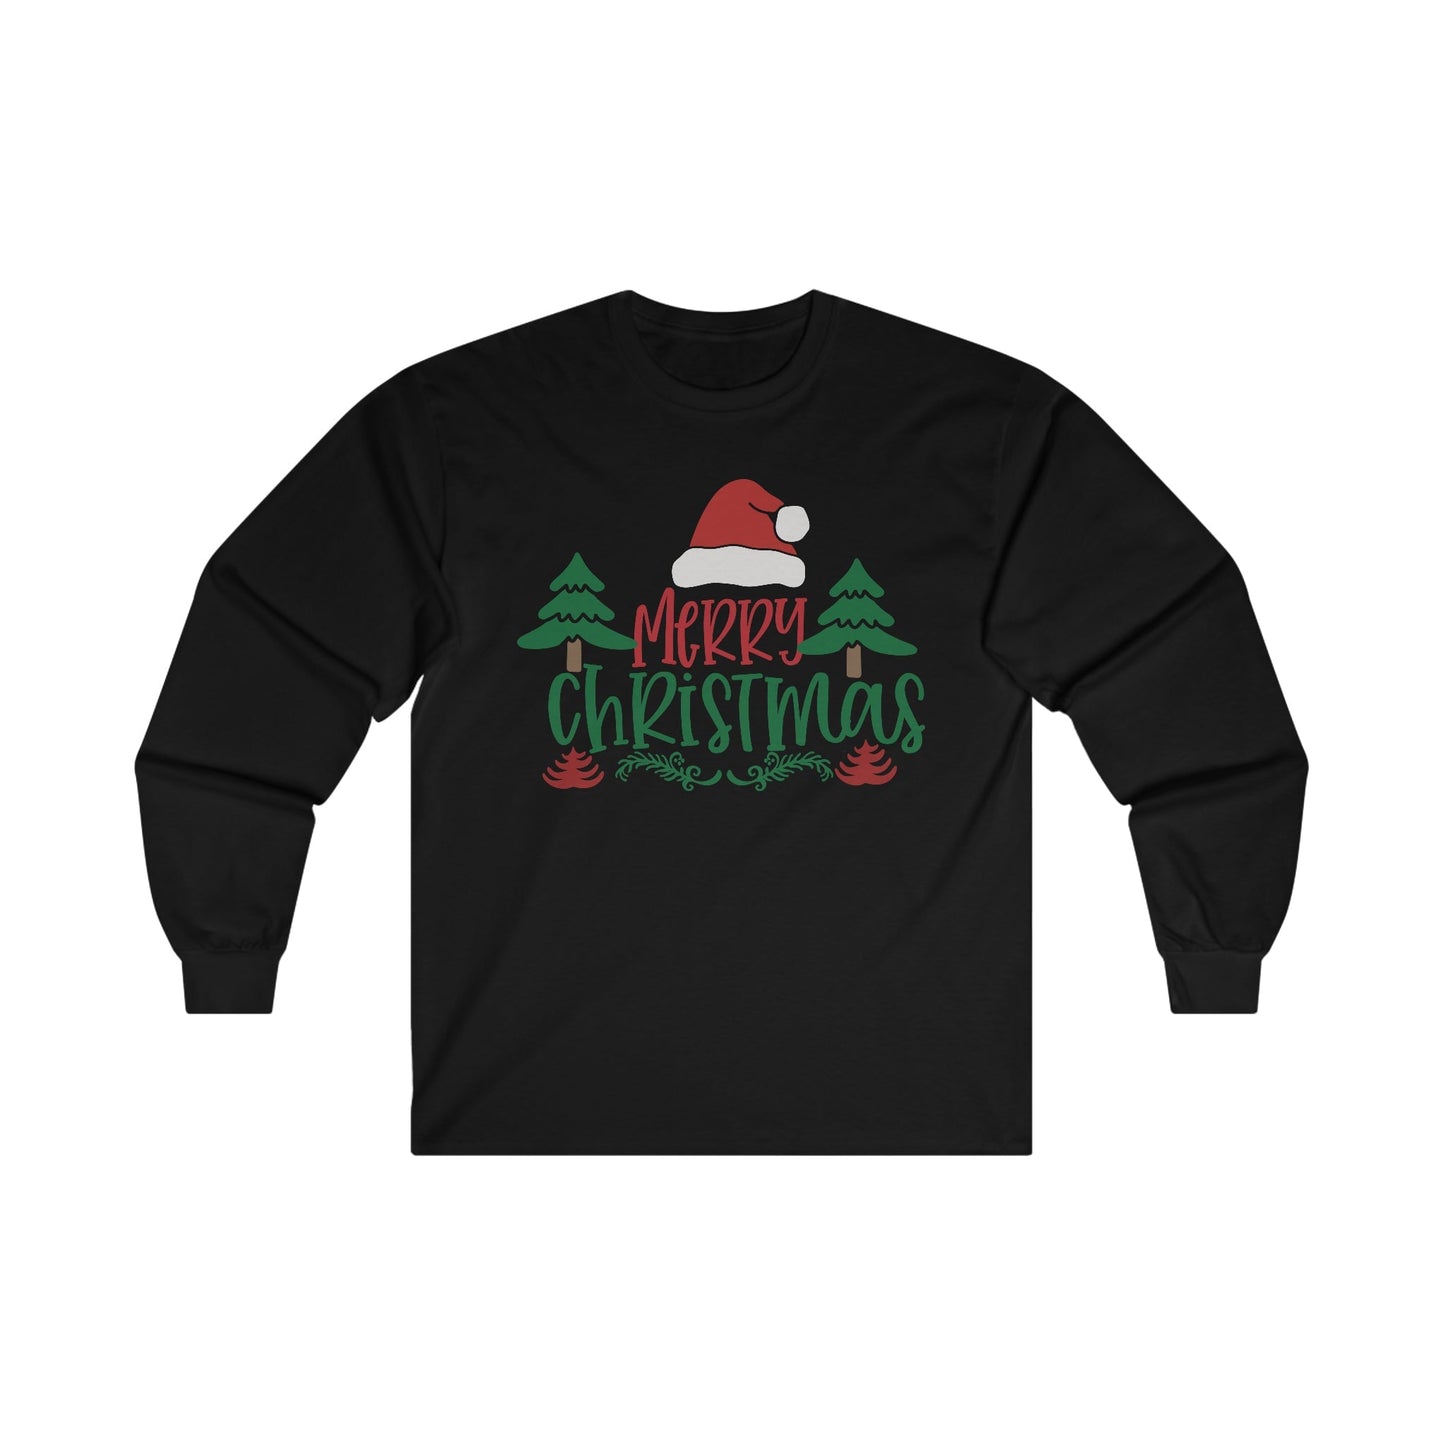 Christmas Long Sleeve T-Shirt - Merry Christmas - Cute Christmas Shirts - Youth and Adult Christmas Long Sleeve TShirts Long Sleeve T-Shirts Graphic Avenue Black Adult Small 